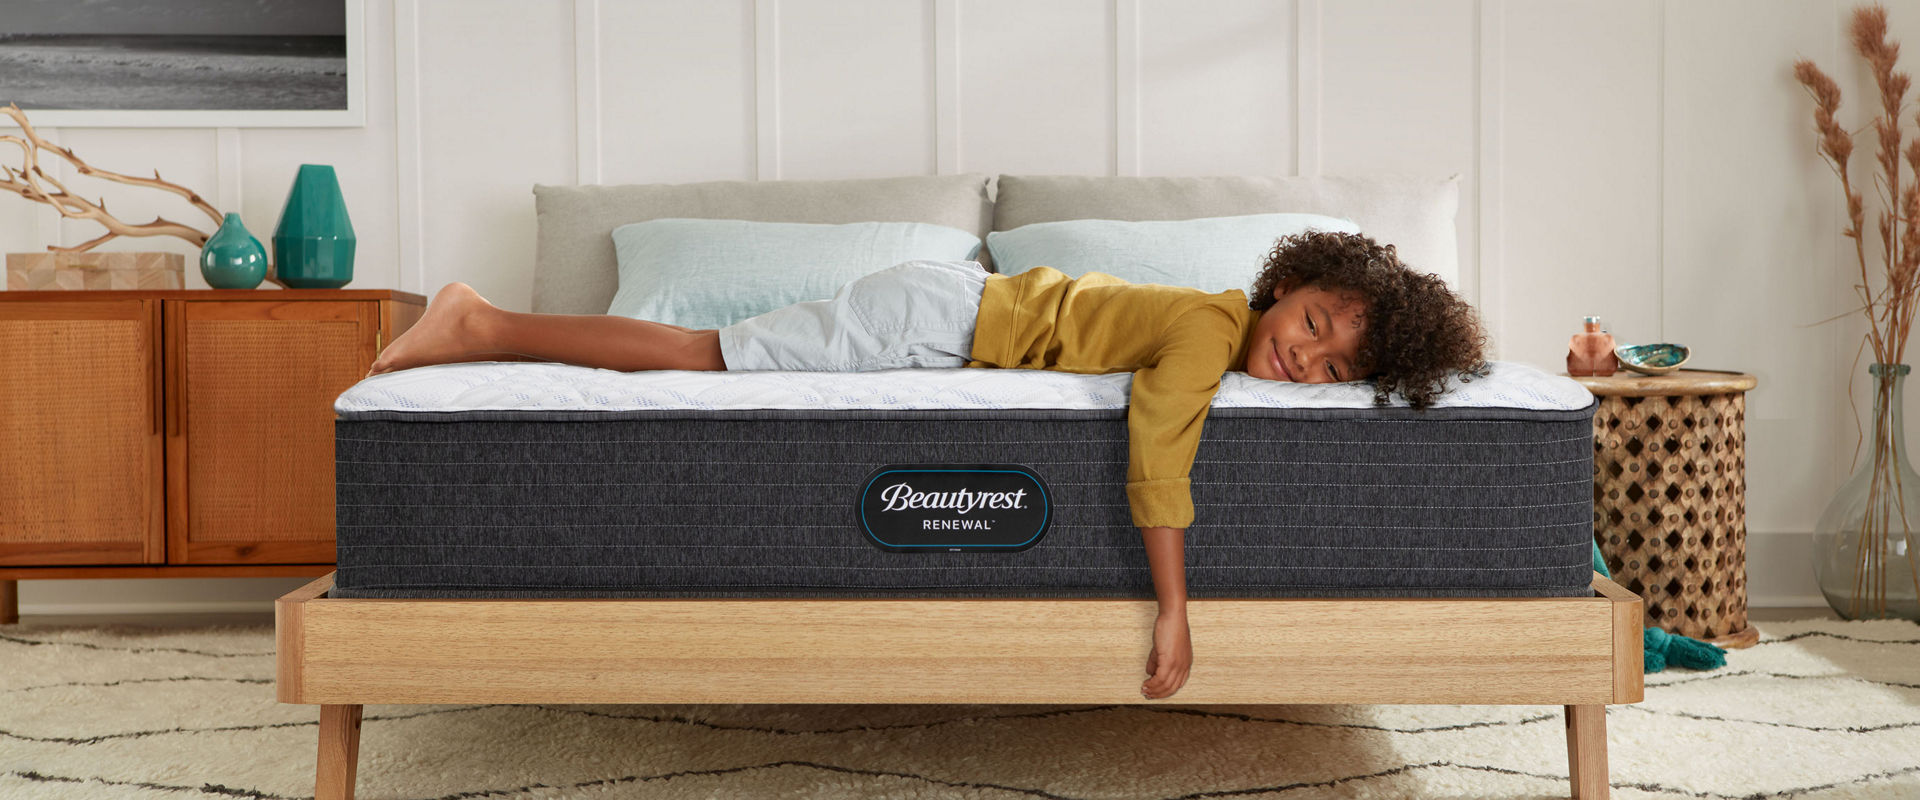 Child on Beautyrest renewal mattress